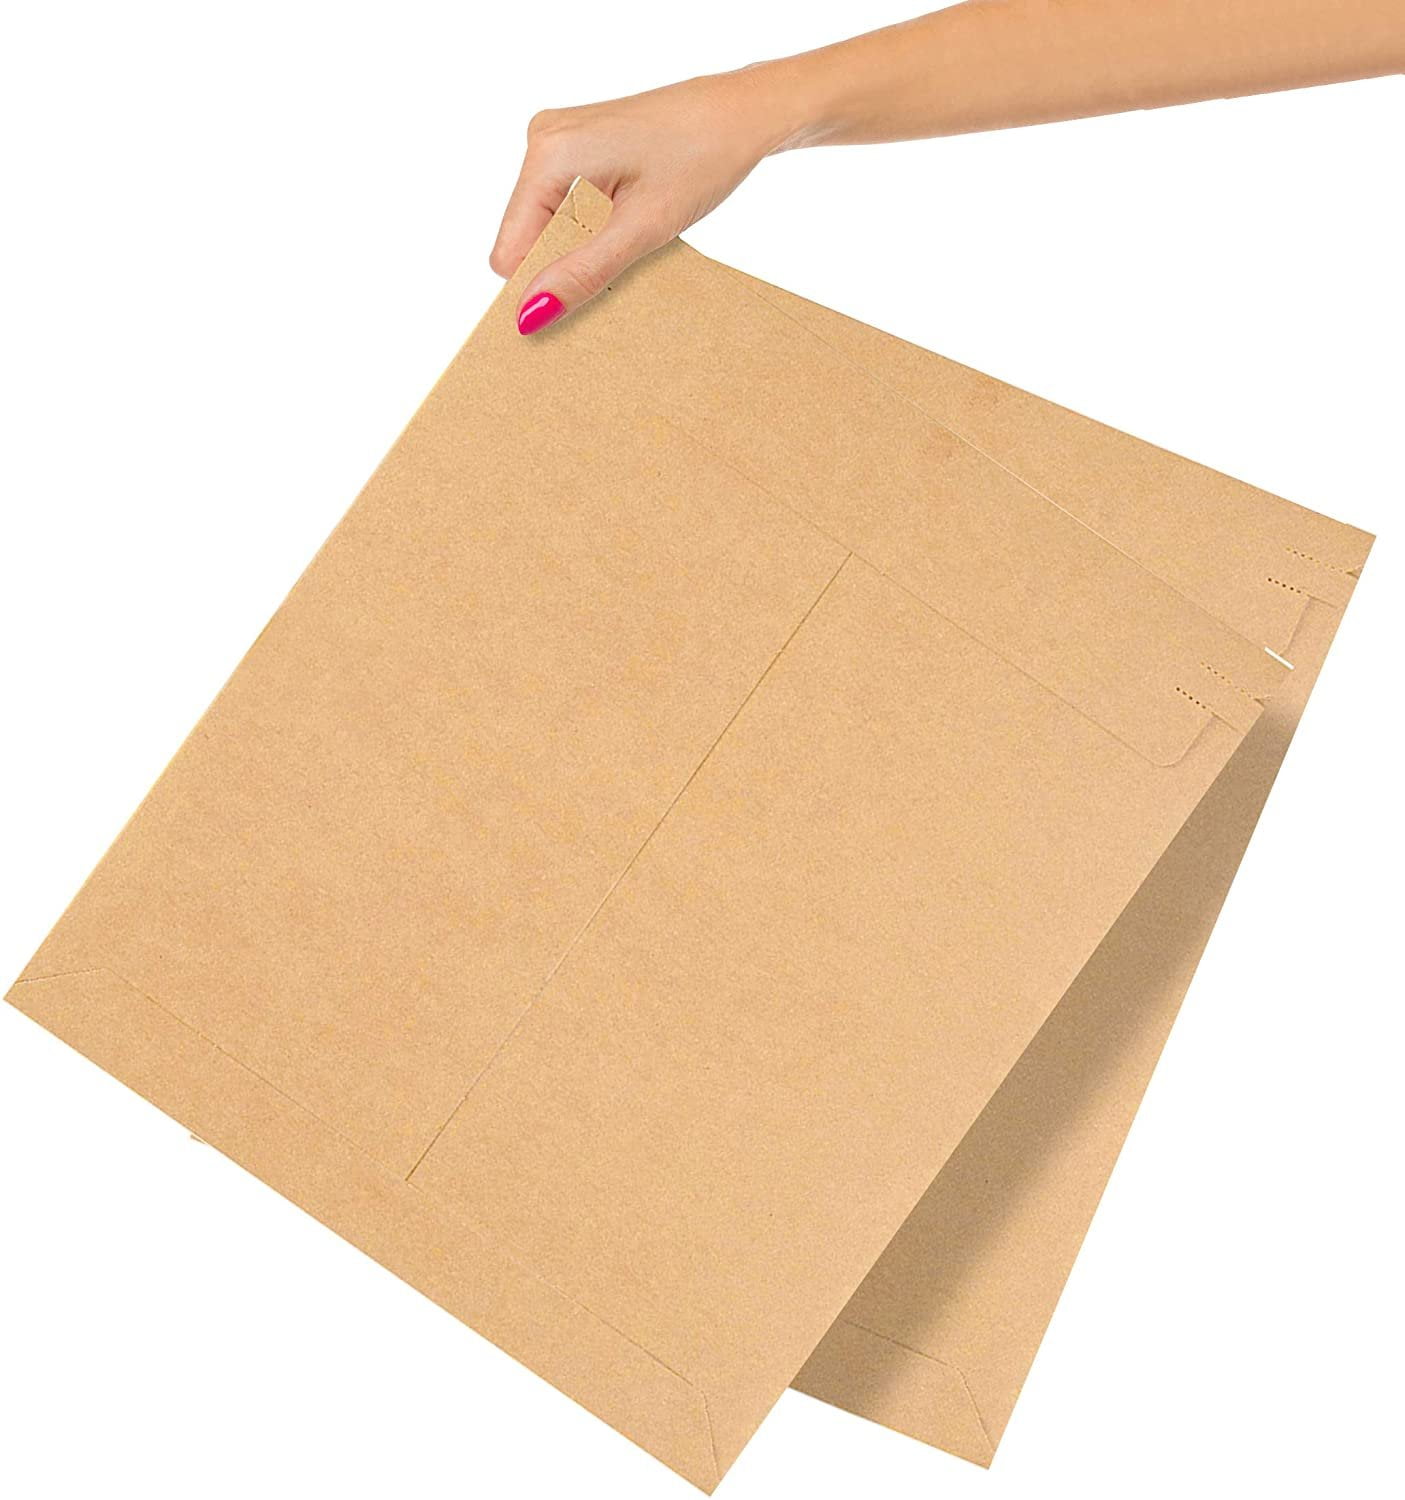 Cardboard mailers